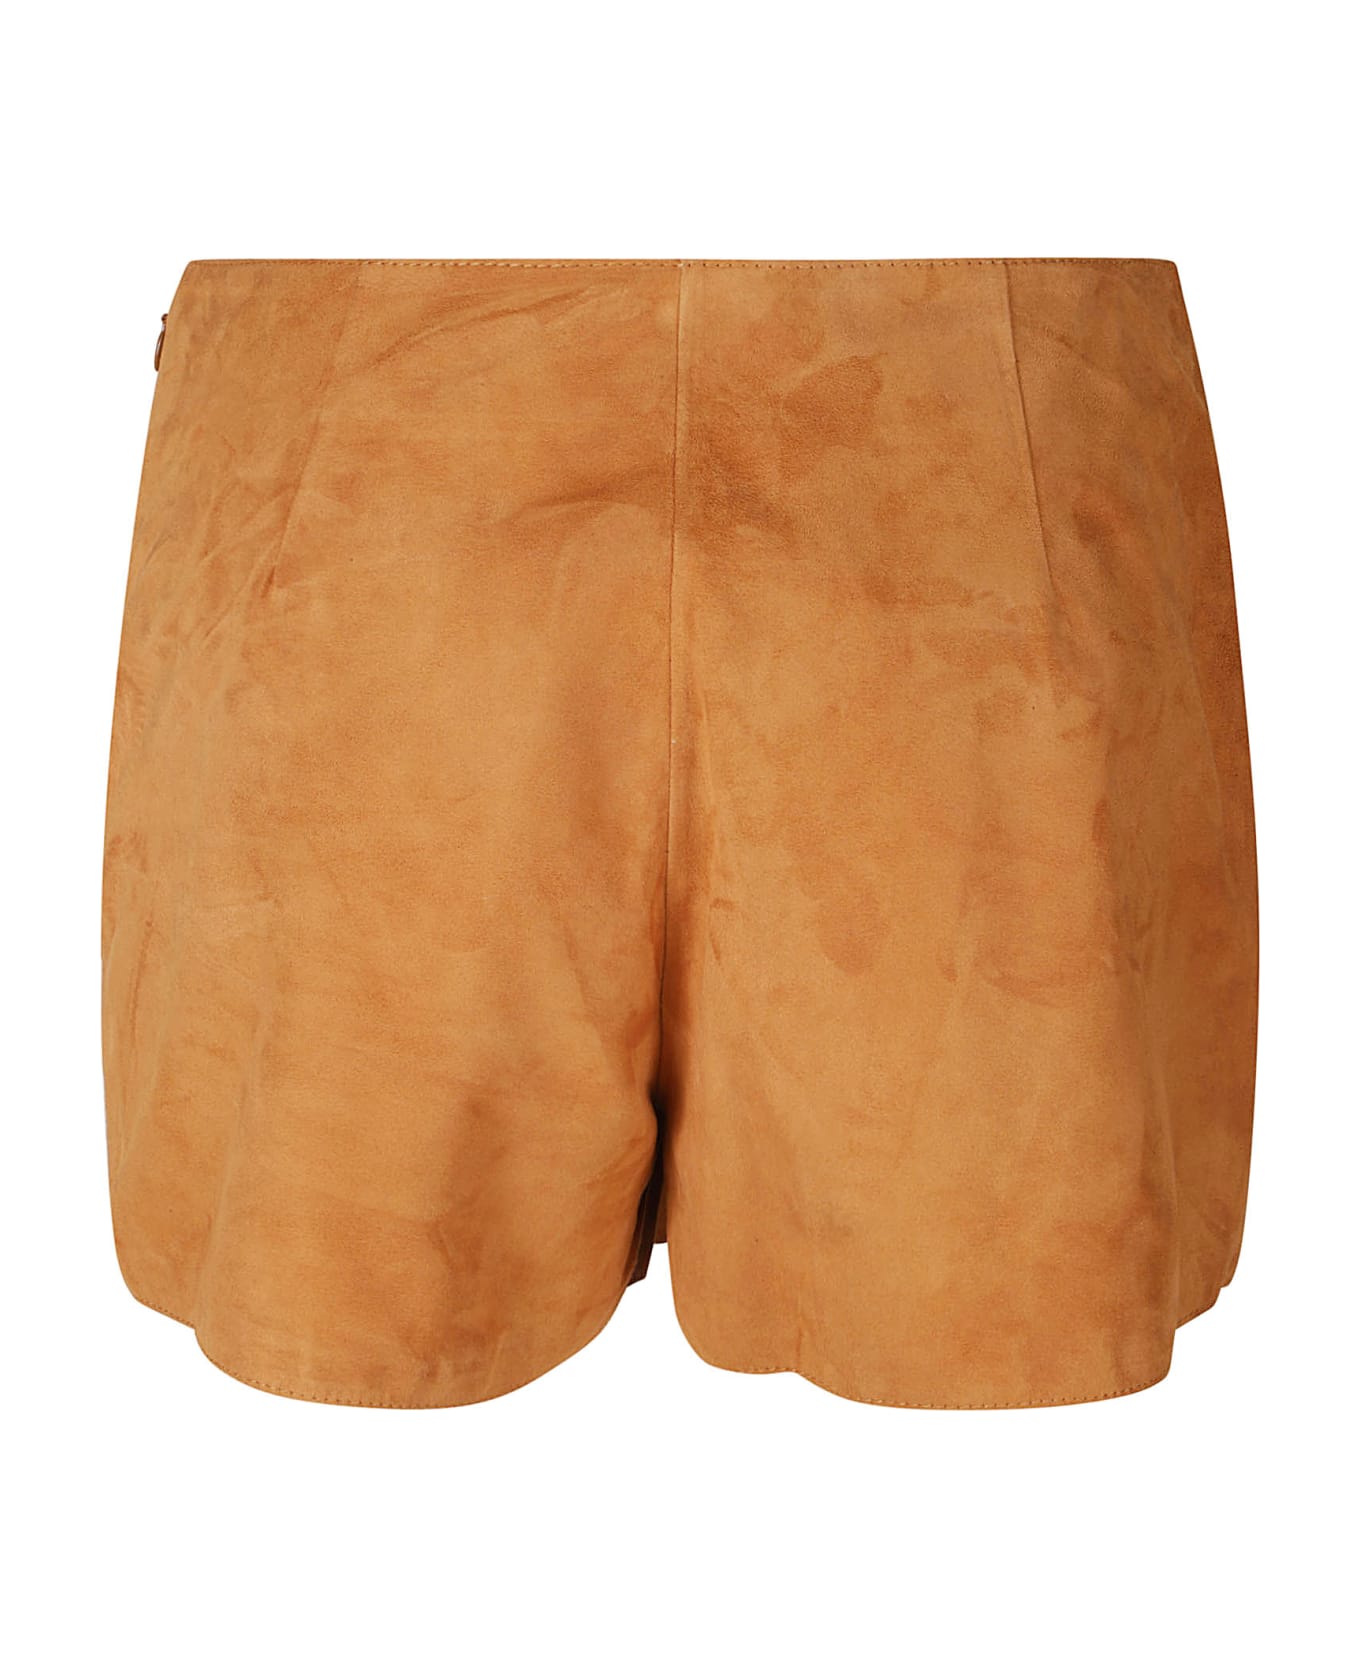 Ermanno Scervino Plain Velvet Shorts - Cuoio